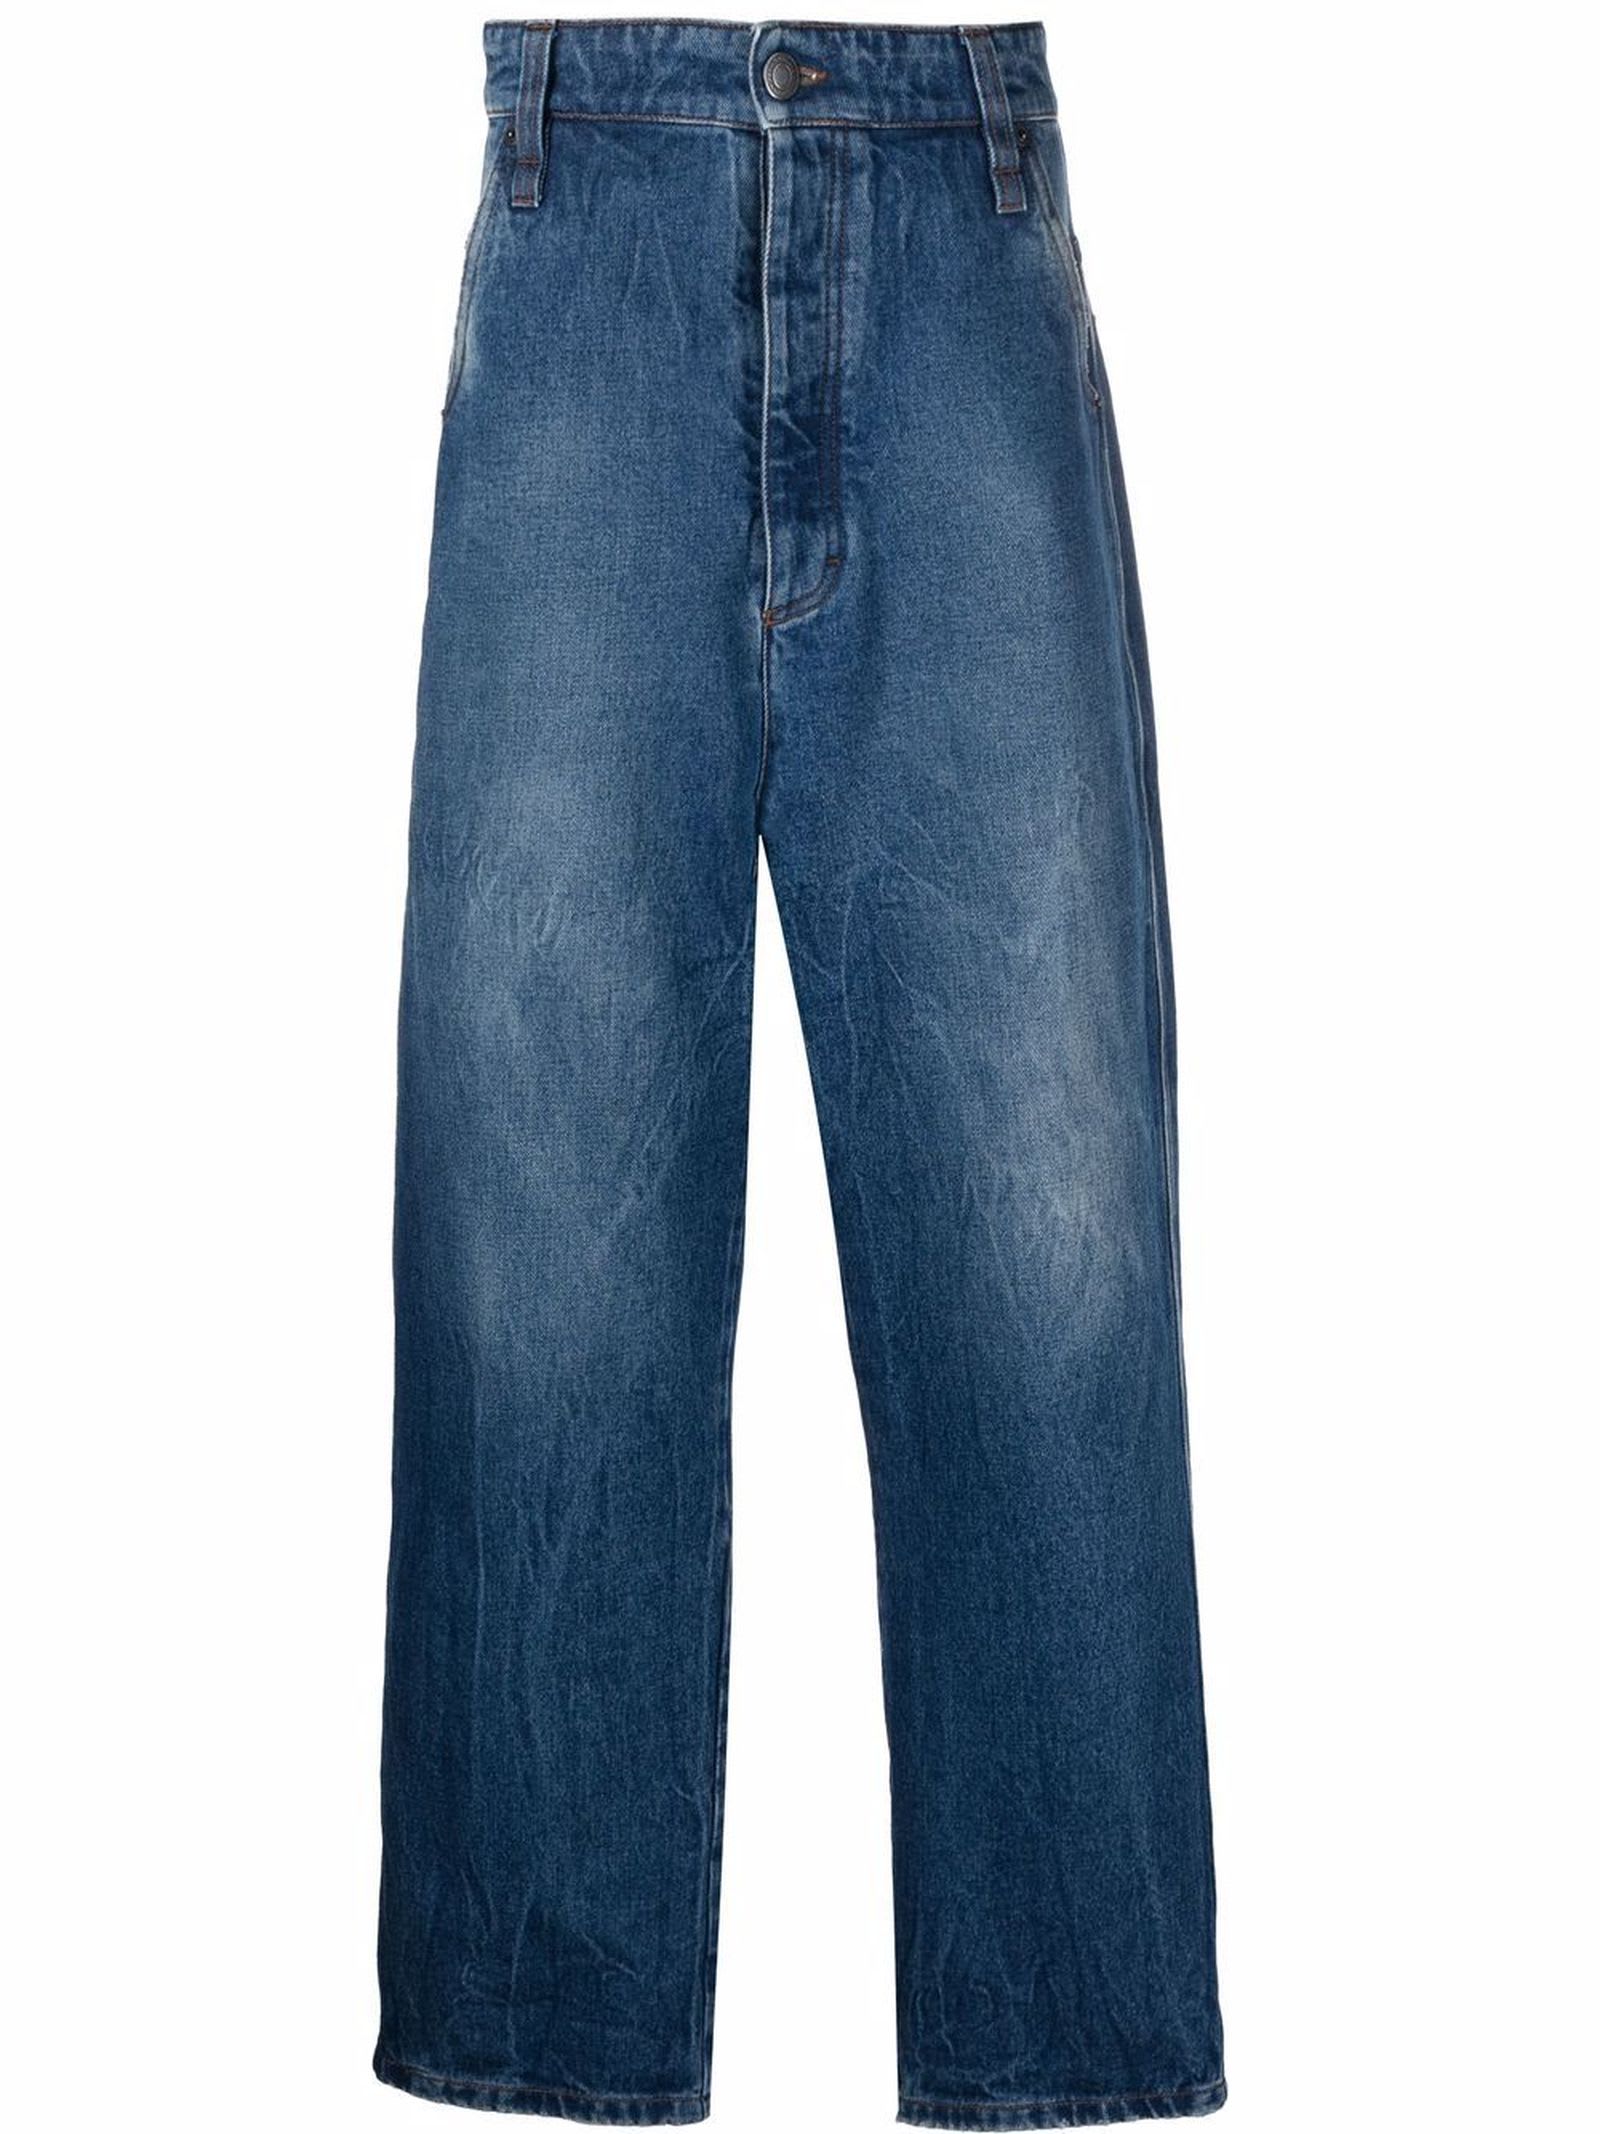 Ami Alexandre Mattiussi Blue Cotton Denim Jeans